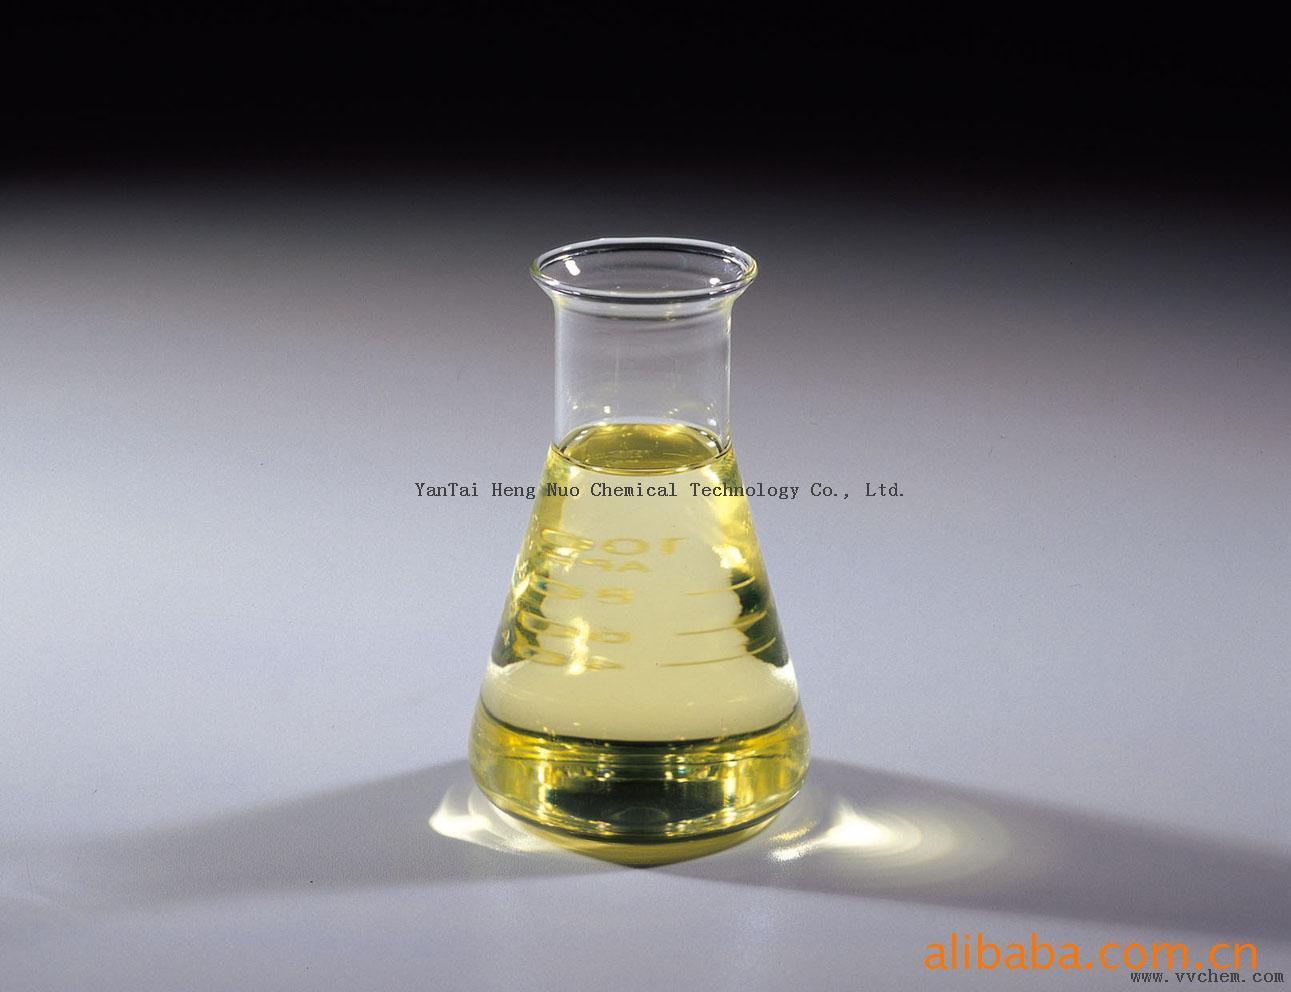 808 CAS NO:68411-20-1, butyraldehyde anilin-condensate, accelerant 808,dimercapto thiadiazole vulcanizing accelerant ,NR BR (butylbenaene rubber)adhen